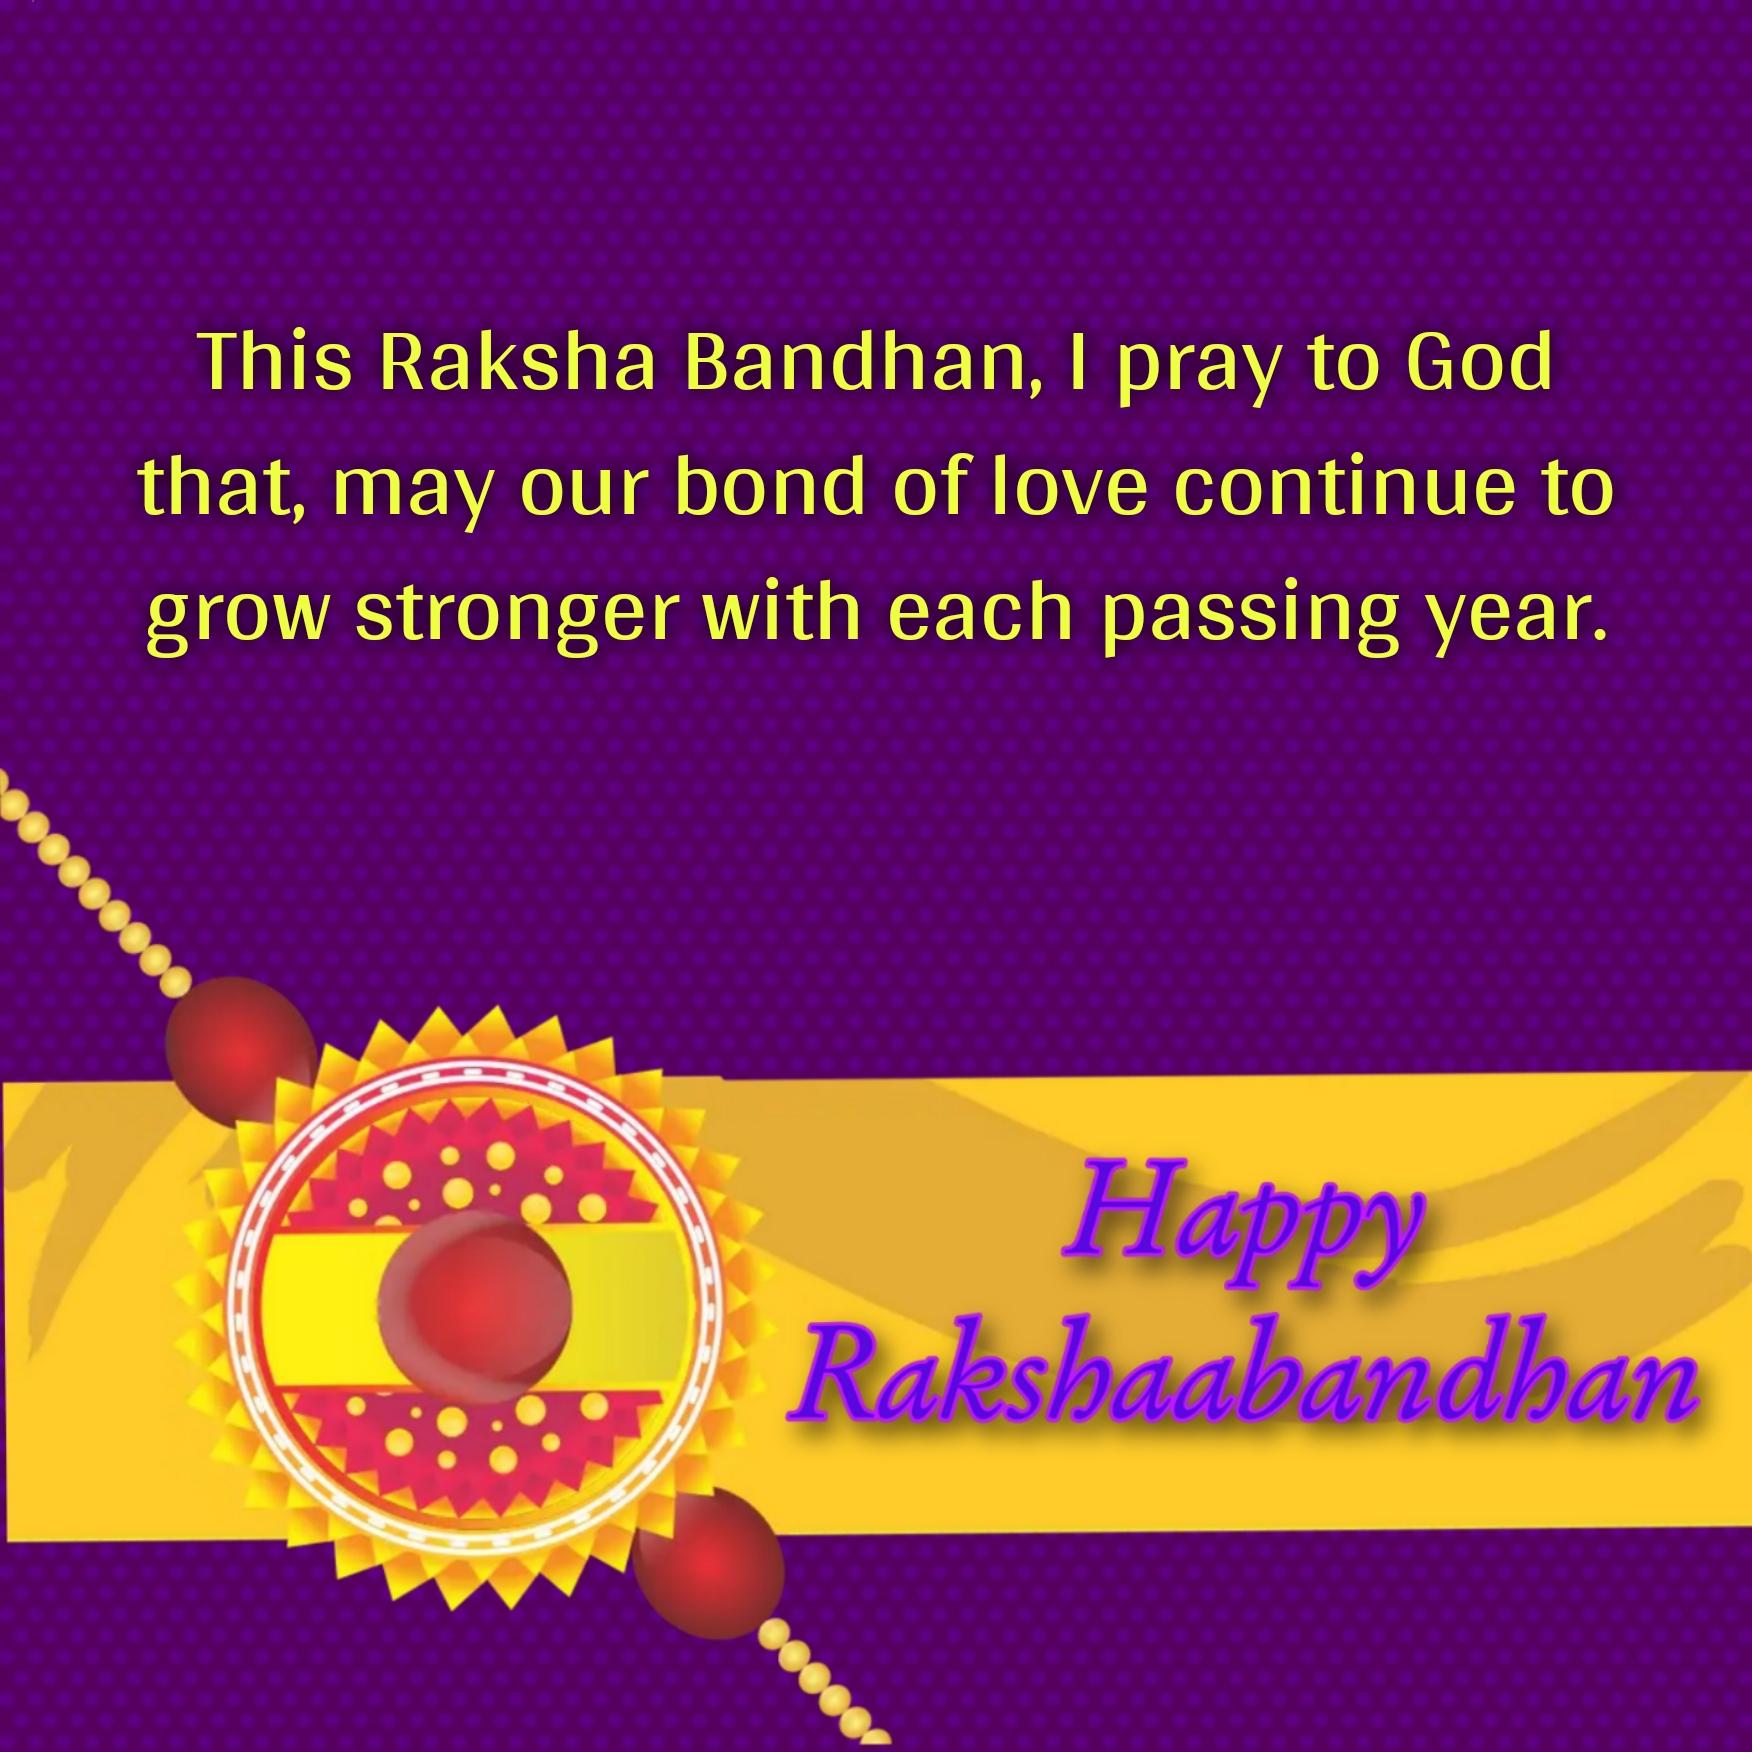 This Raksha Bandhan I pray to God that may our bond of love continue